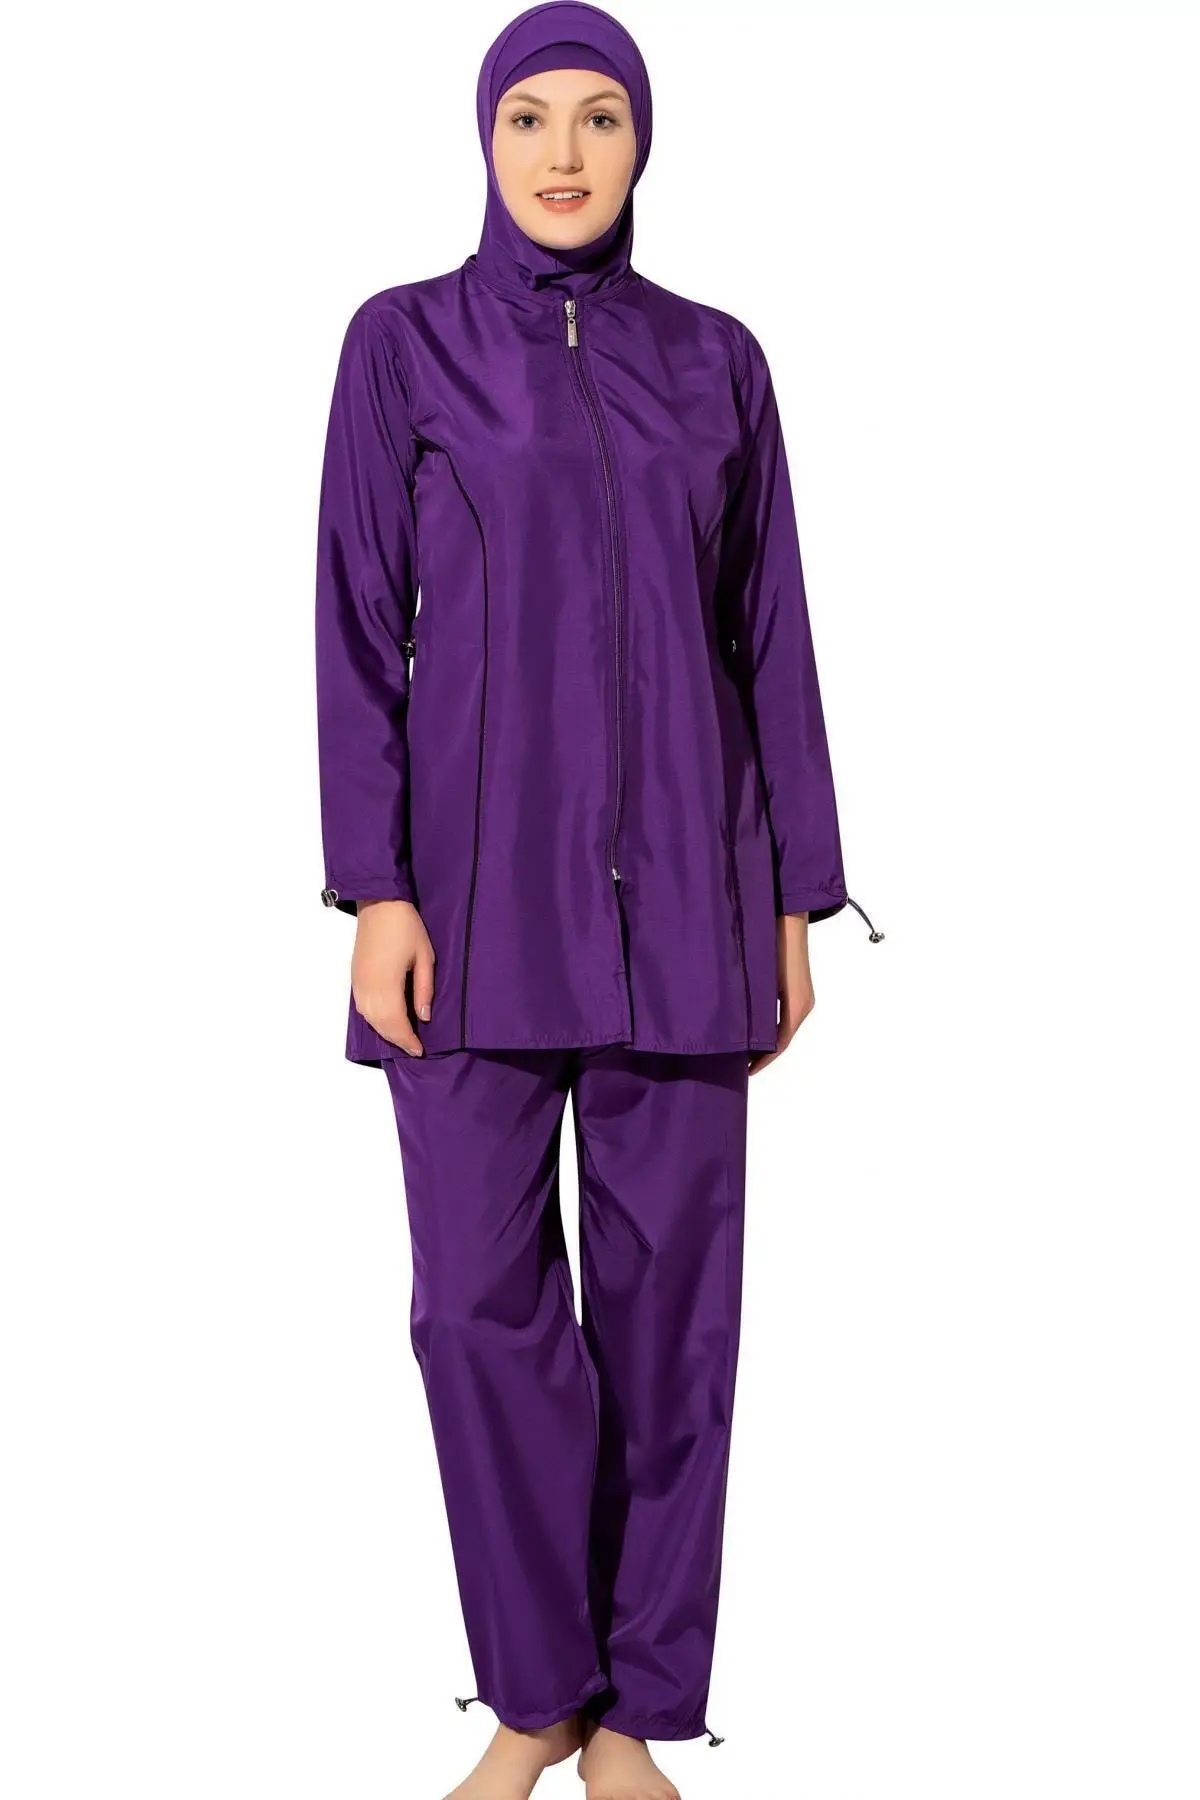 Women's Purple Long Sleeve Solid Plain Full Hijab Swimwear Off Color Beach Clothing